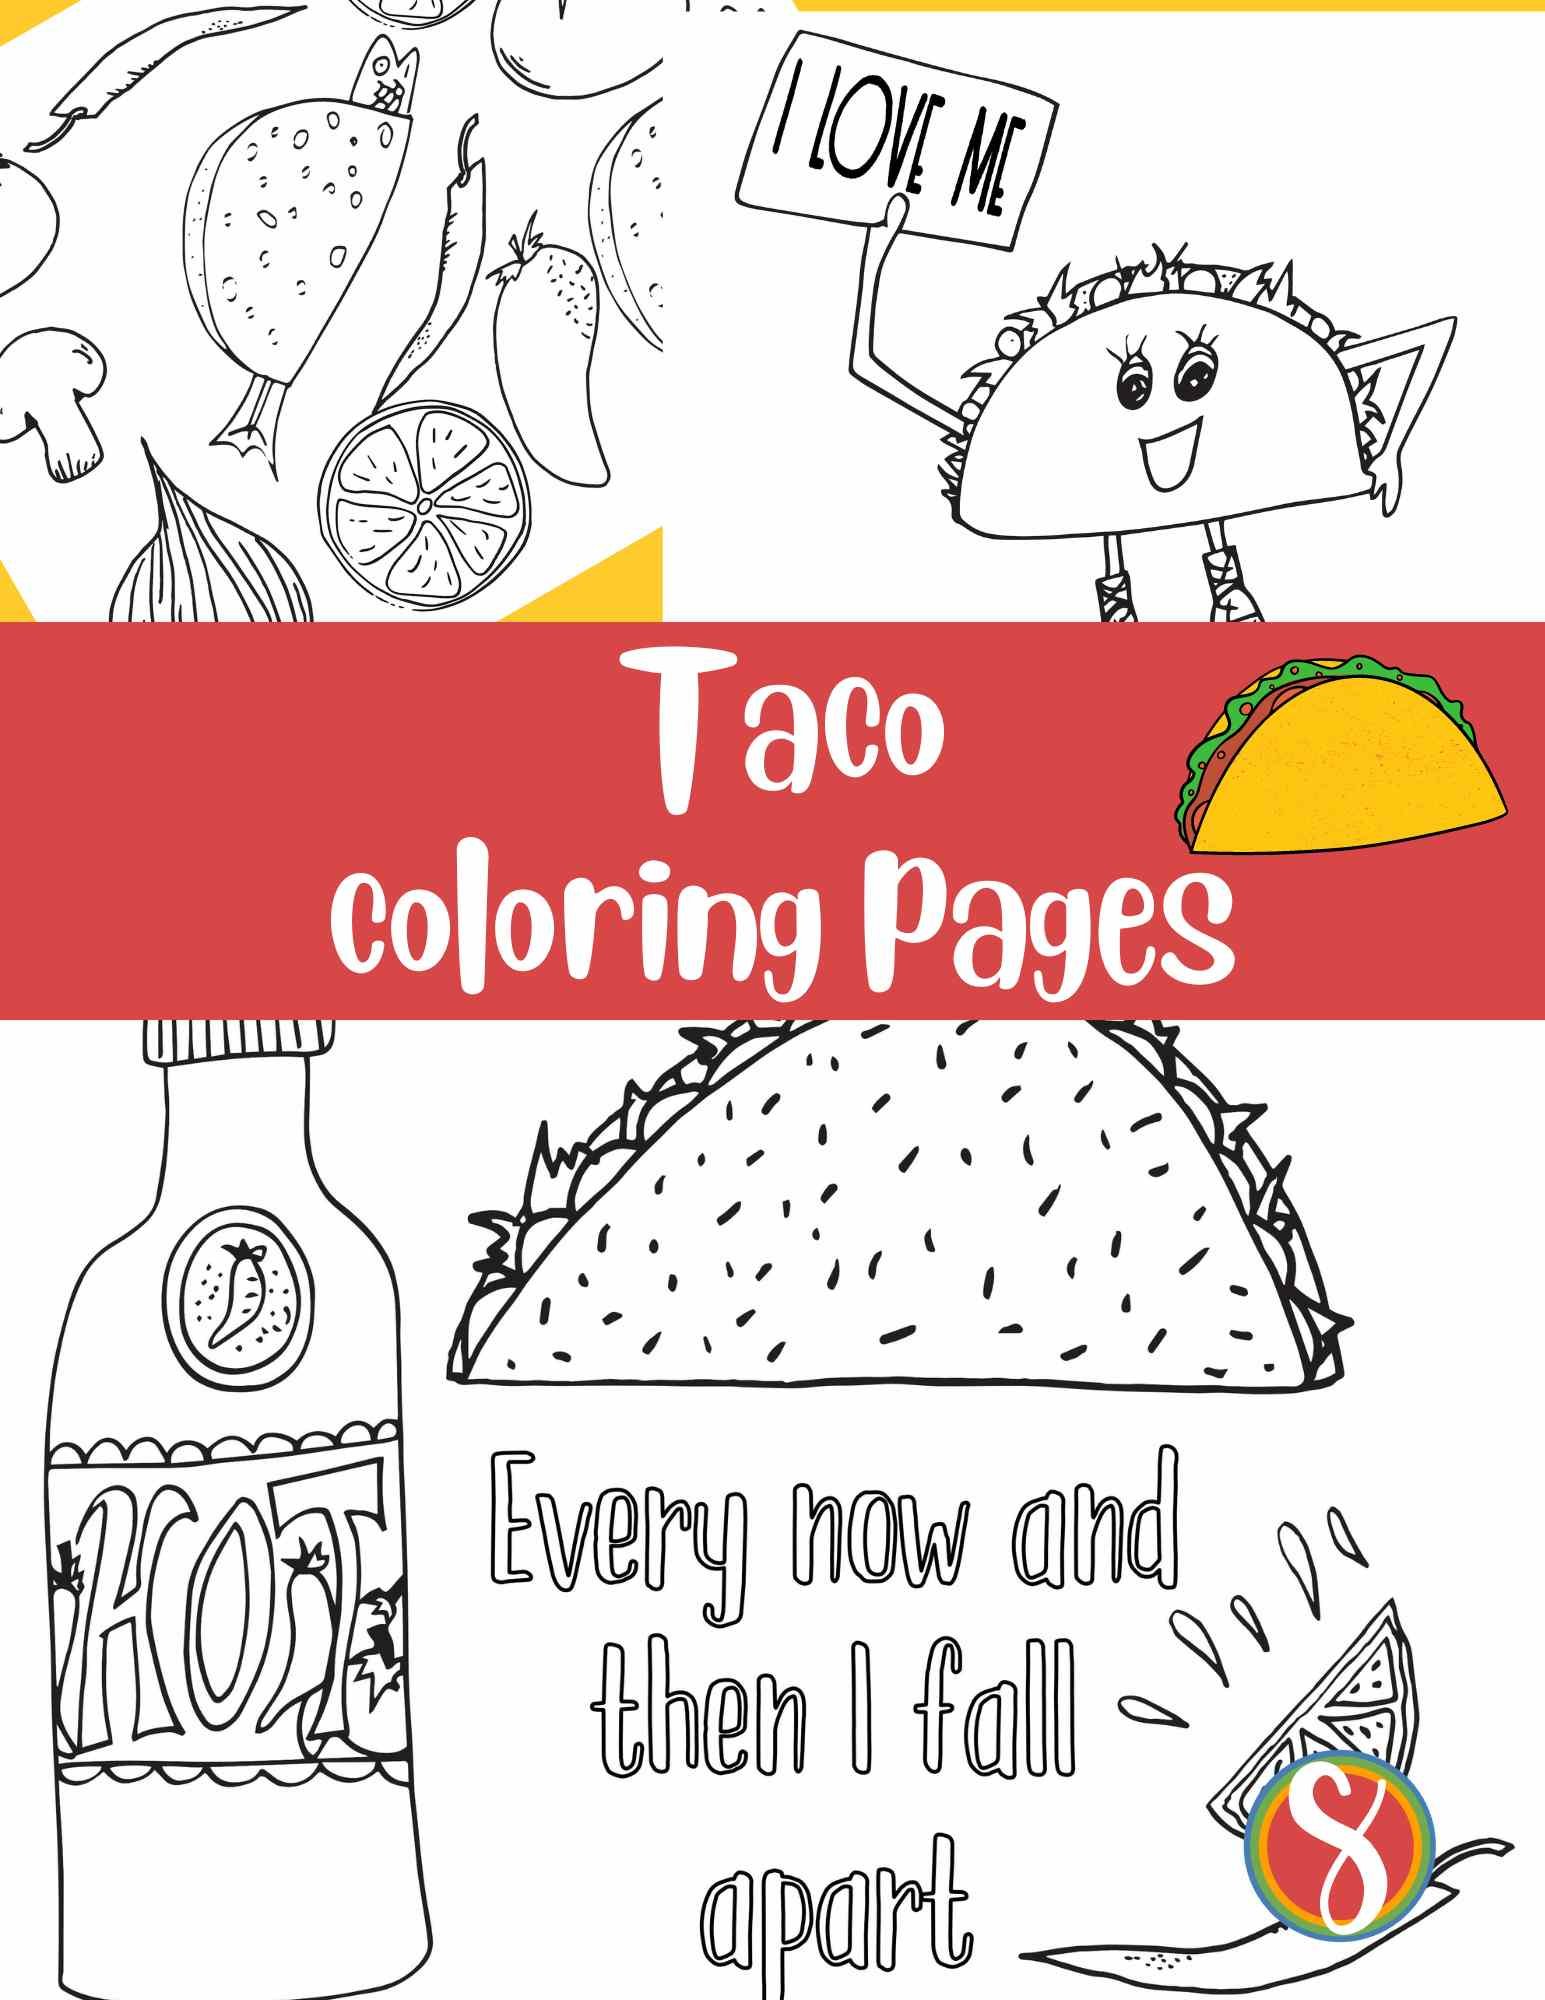 Taco quote coloring pages â stevie doodles